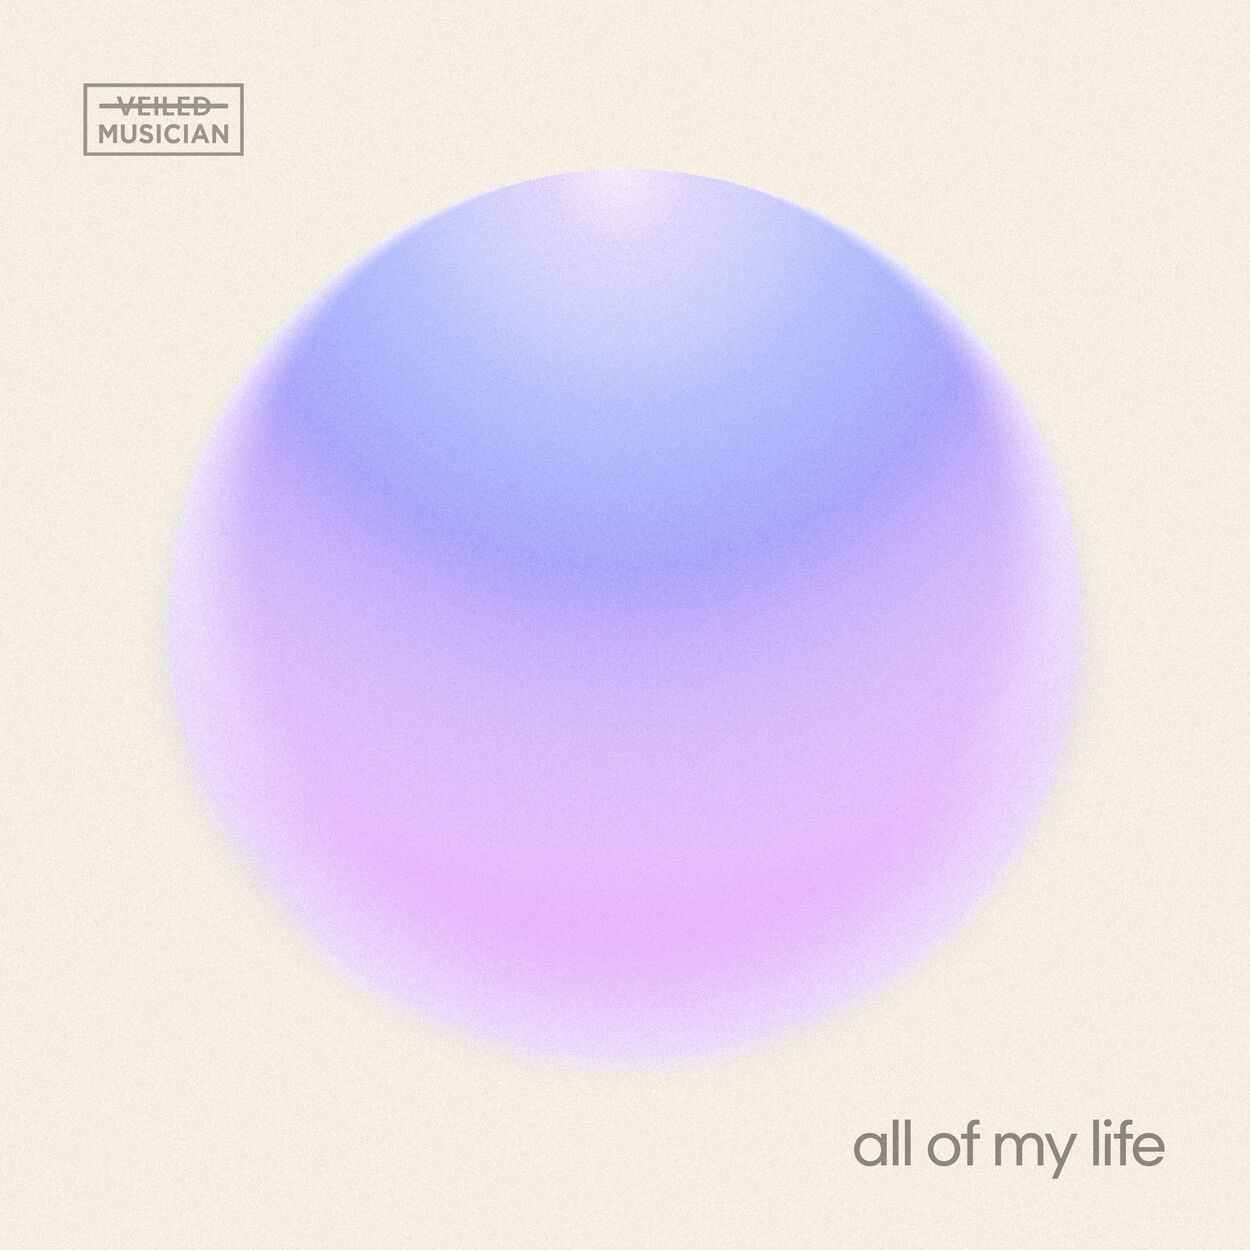 Yang Da Il – all of my life (Veiled Musician X Yang Da Il with Itaewon-dong) – Single